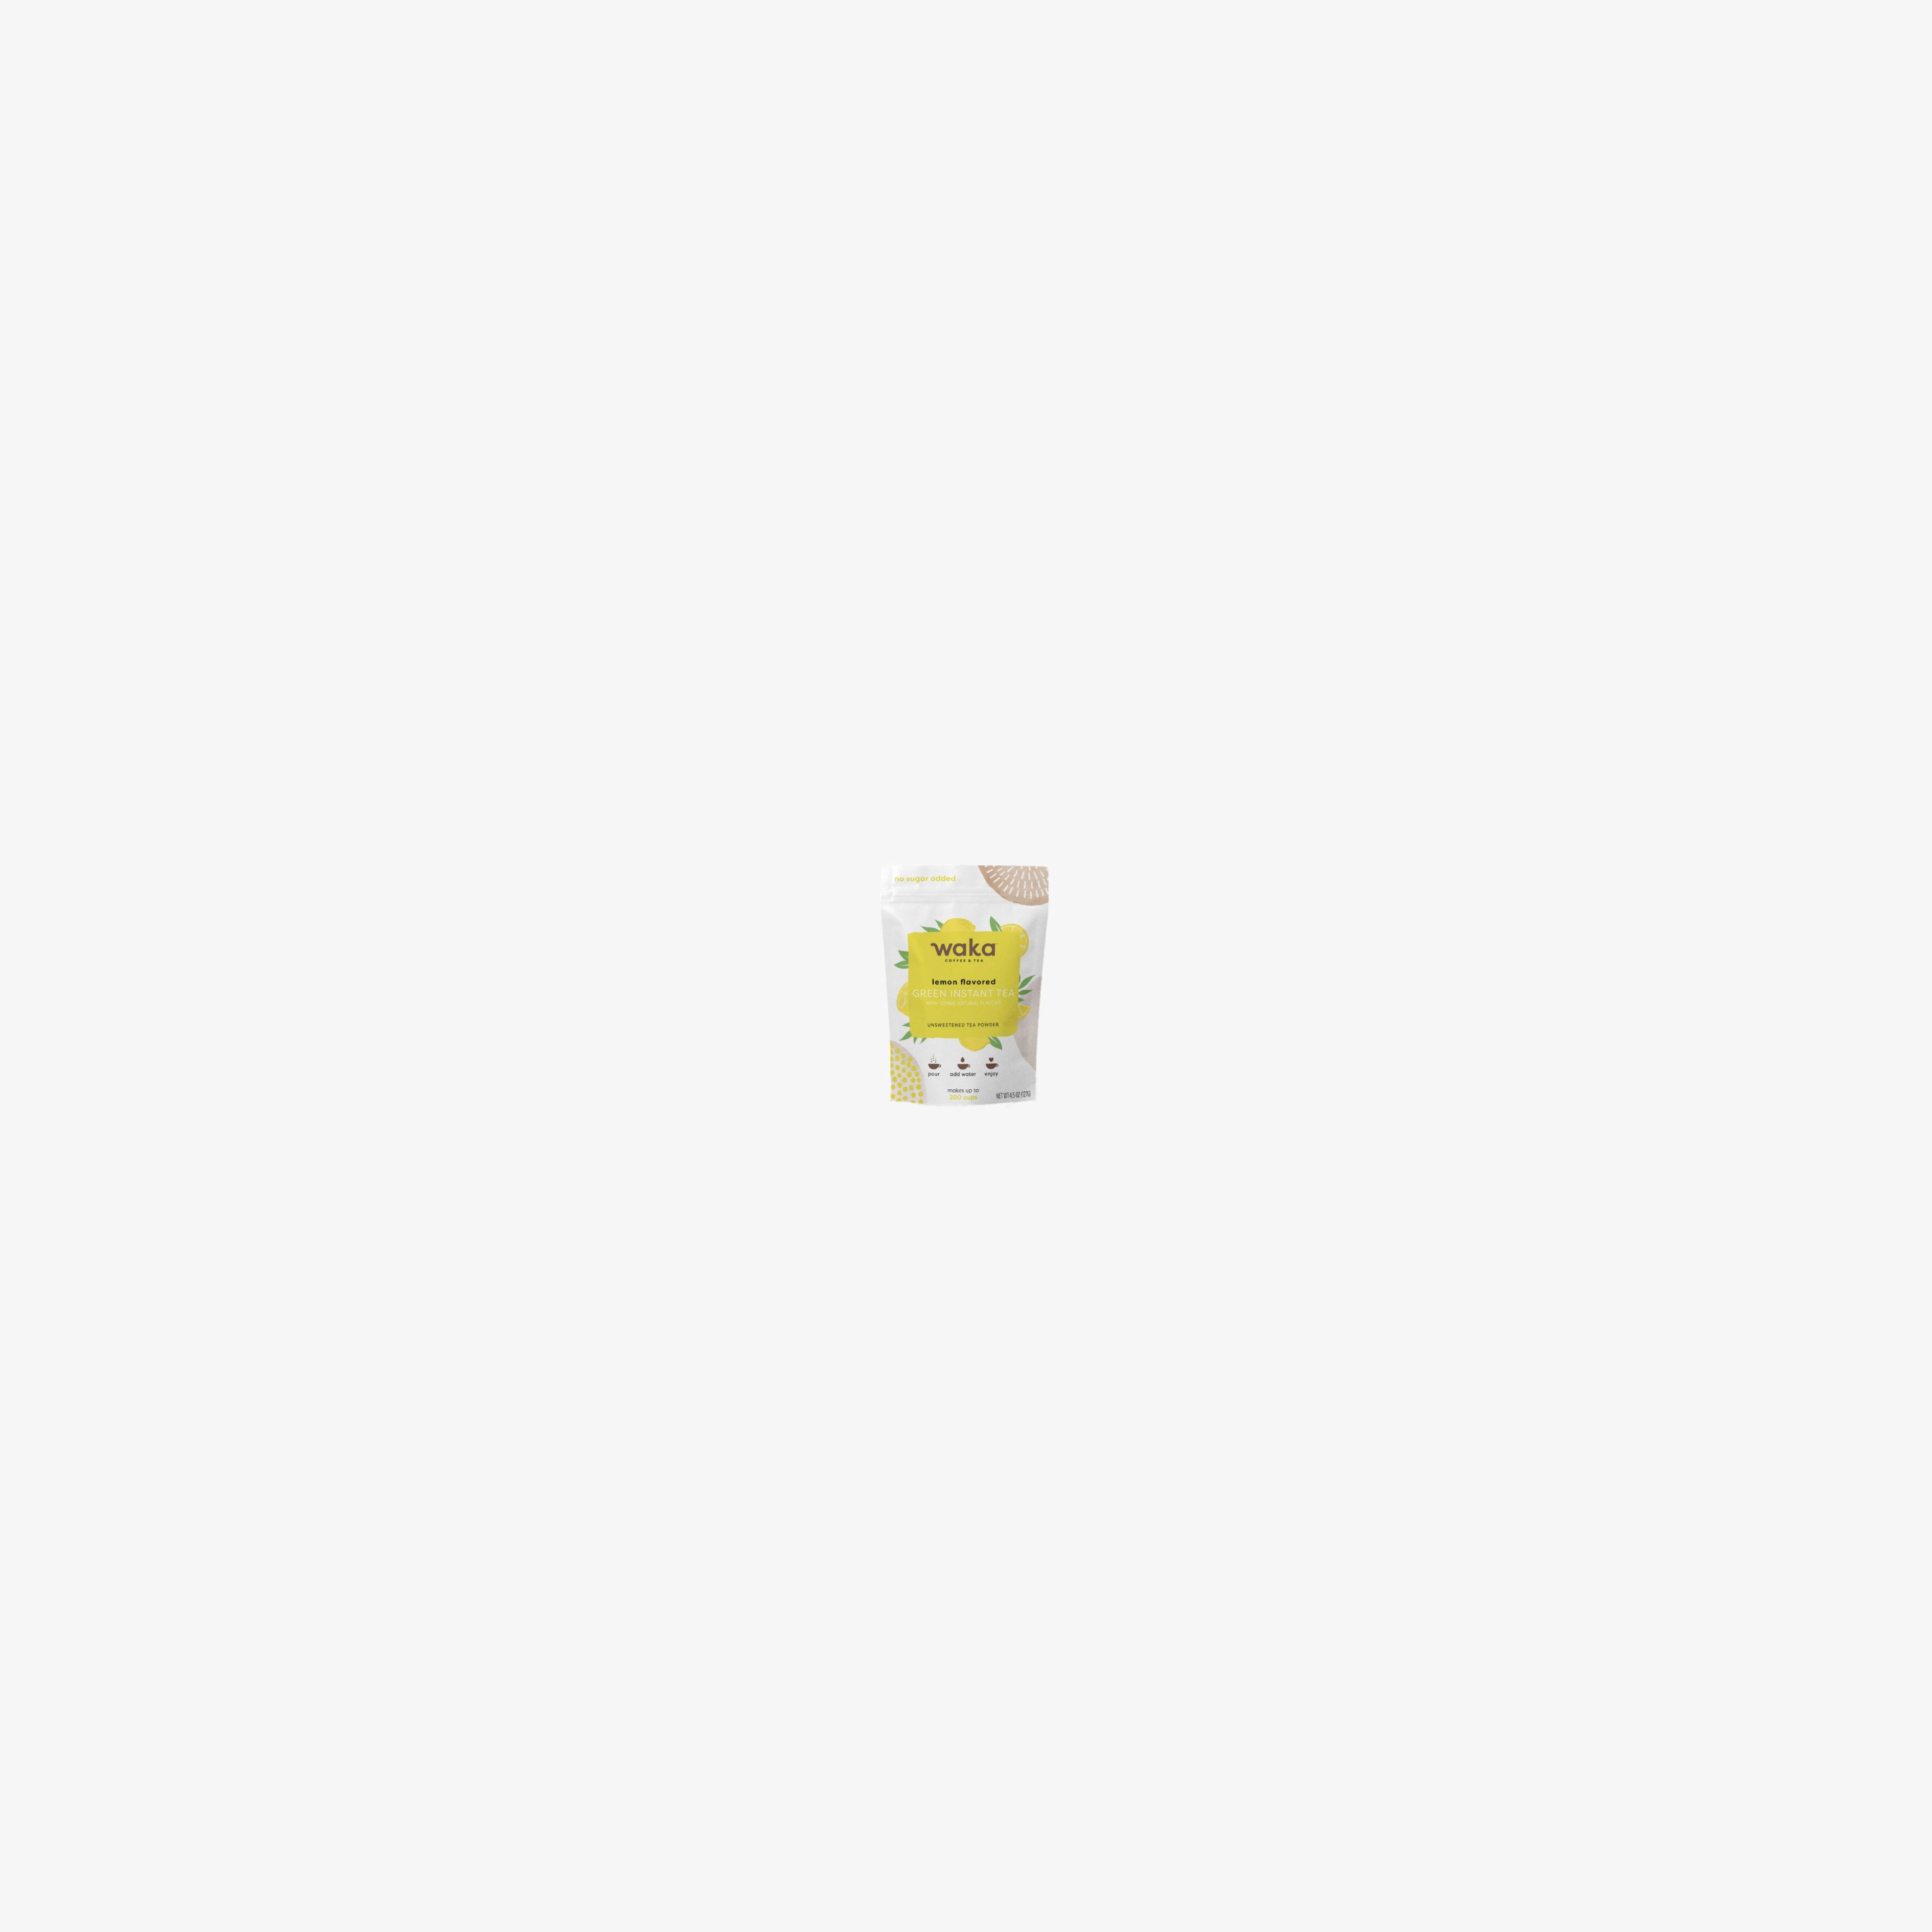 Unsweetened Lemon Flavored Green Instant Tea 4.5 oz Bag